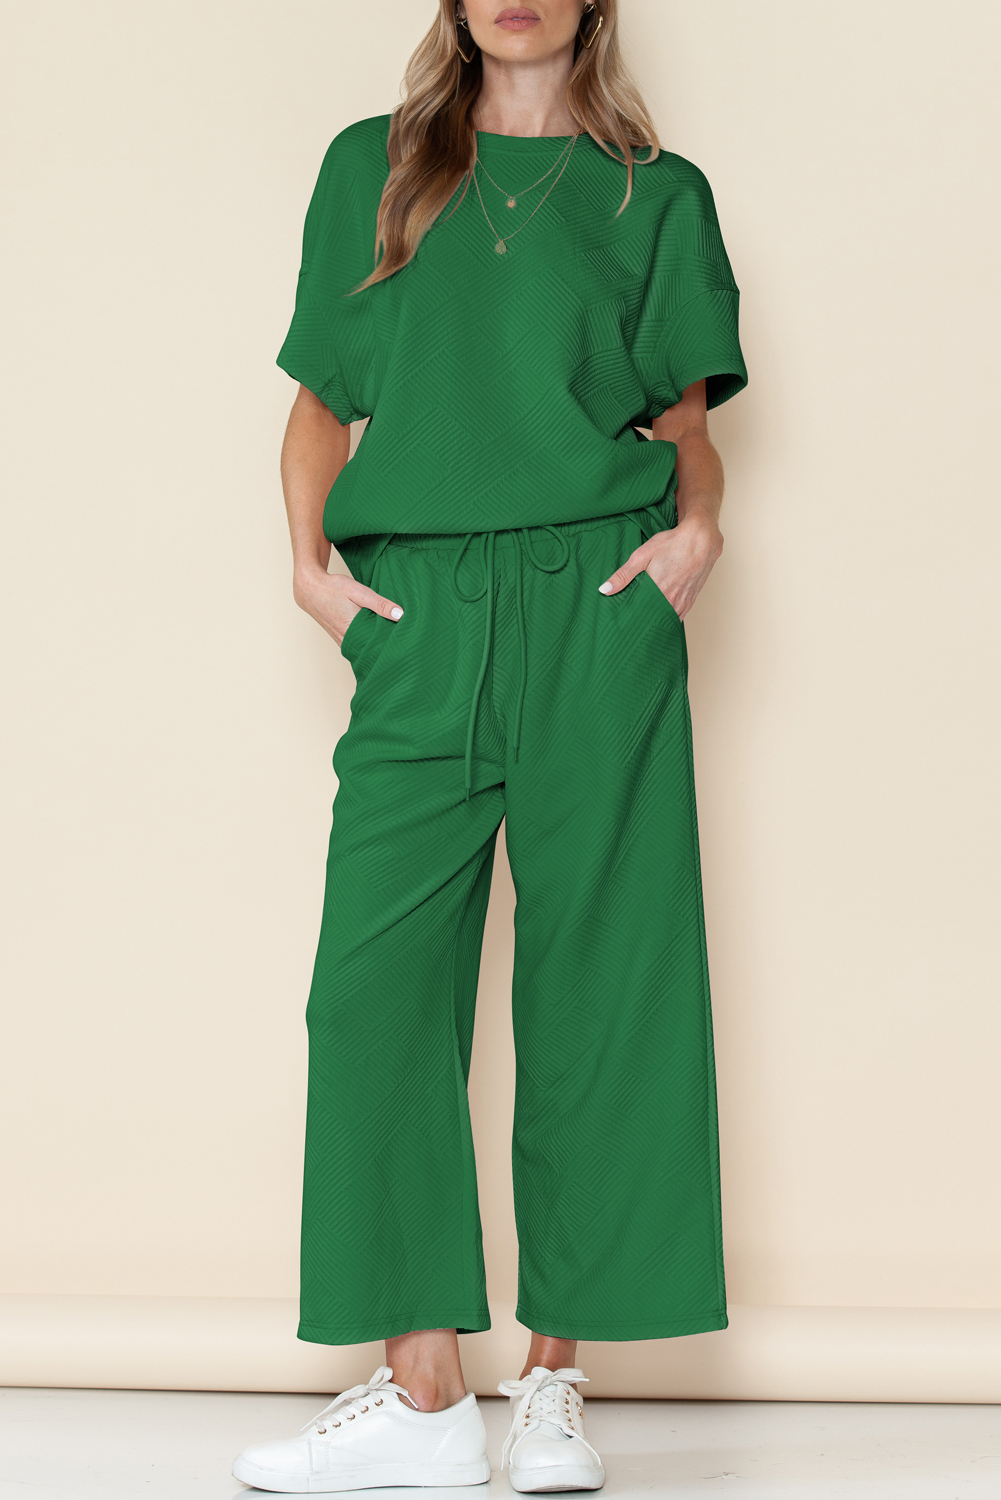 Shewin Wholesale Elegant Dark Green Textured Loose Fit T SHIRT and Drawstring Pants Set